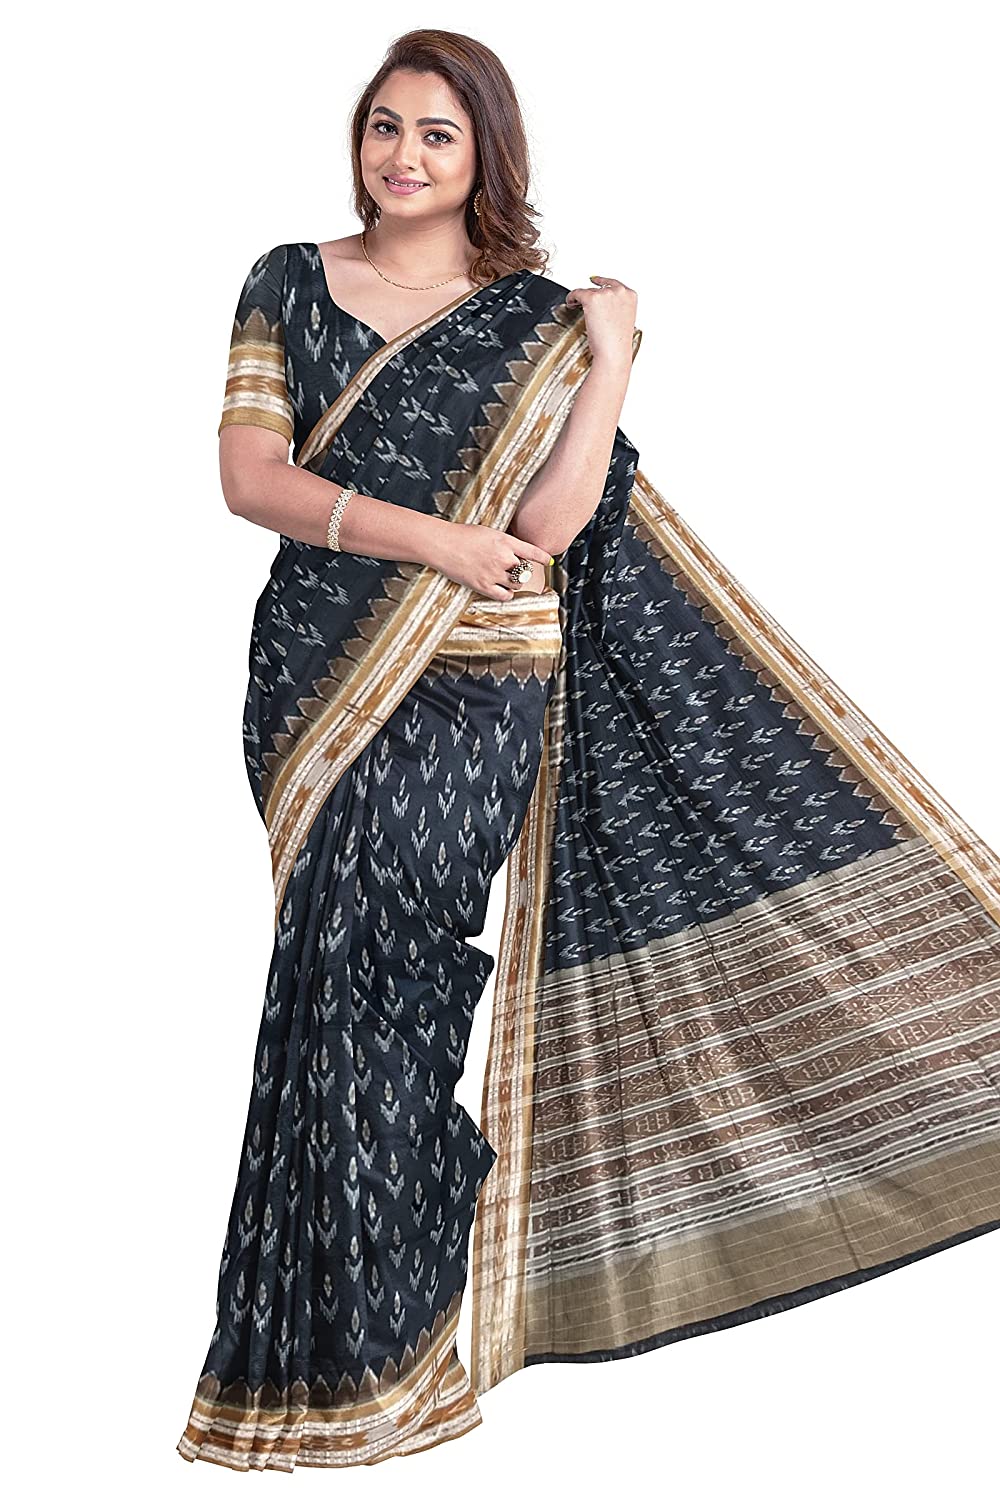 ODISHA HANDLOOM Women's Sambalpuri Cotton Saree with Blouse Piece (bk bw bb, Black) - OdiaDeals